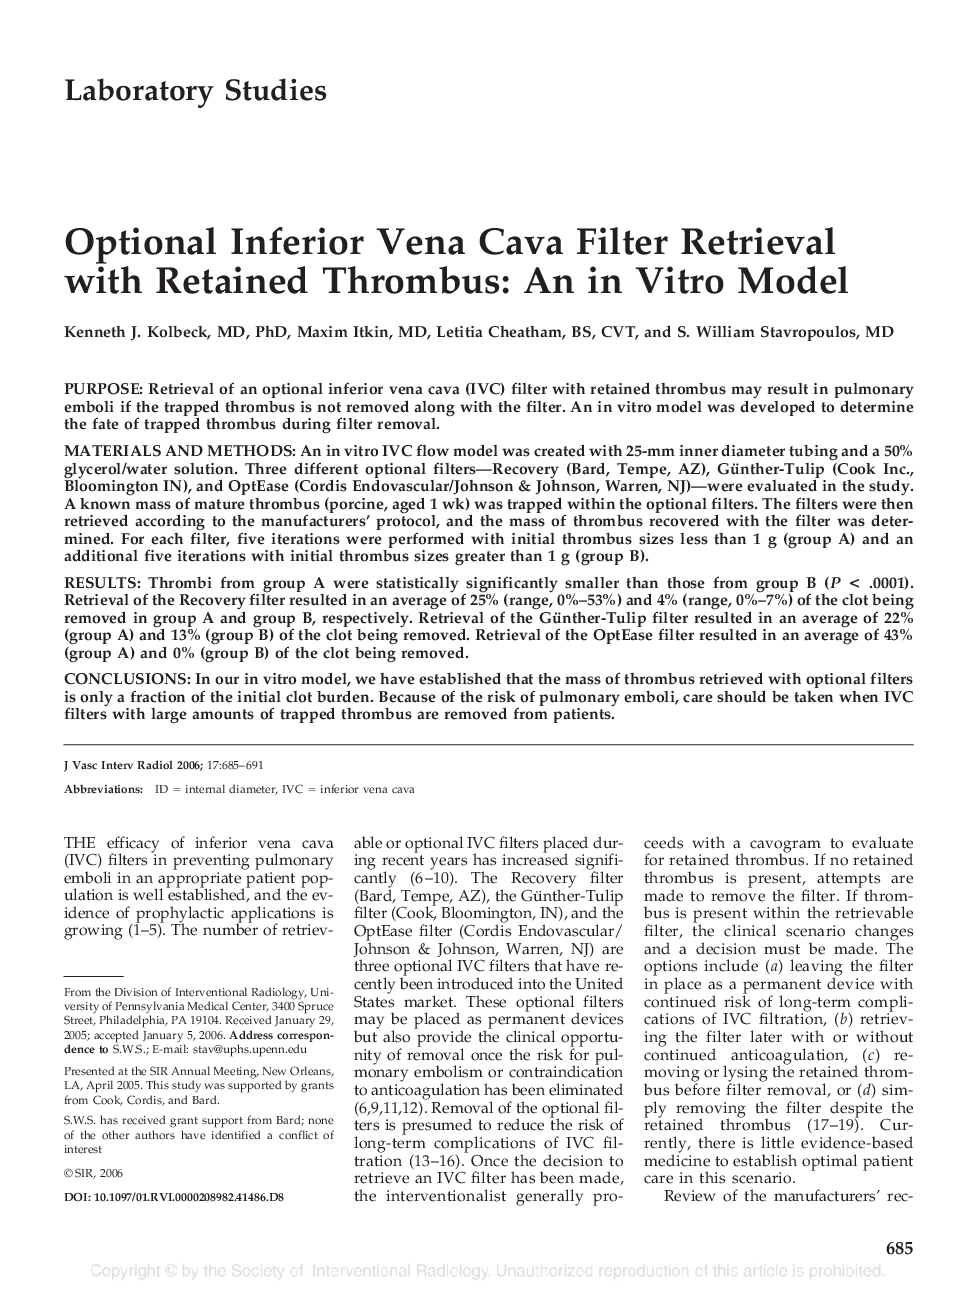 Optional Inferior Vena Cava Filter Retrieval with Retained Thrombus: An in Vitro Model